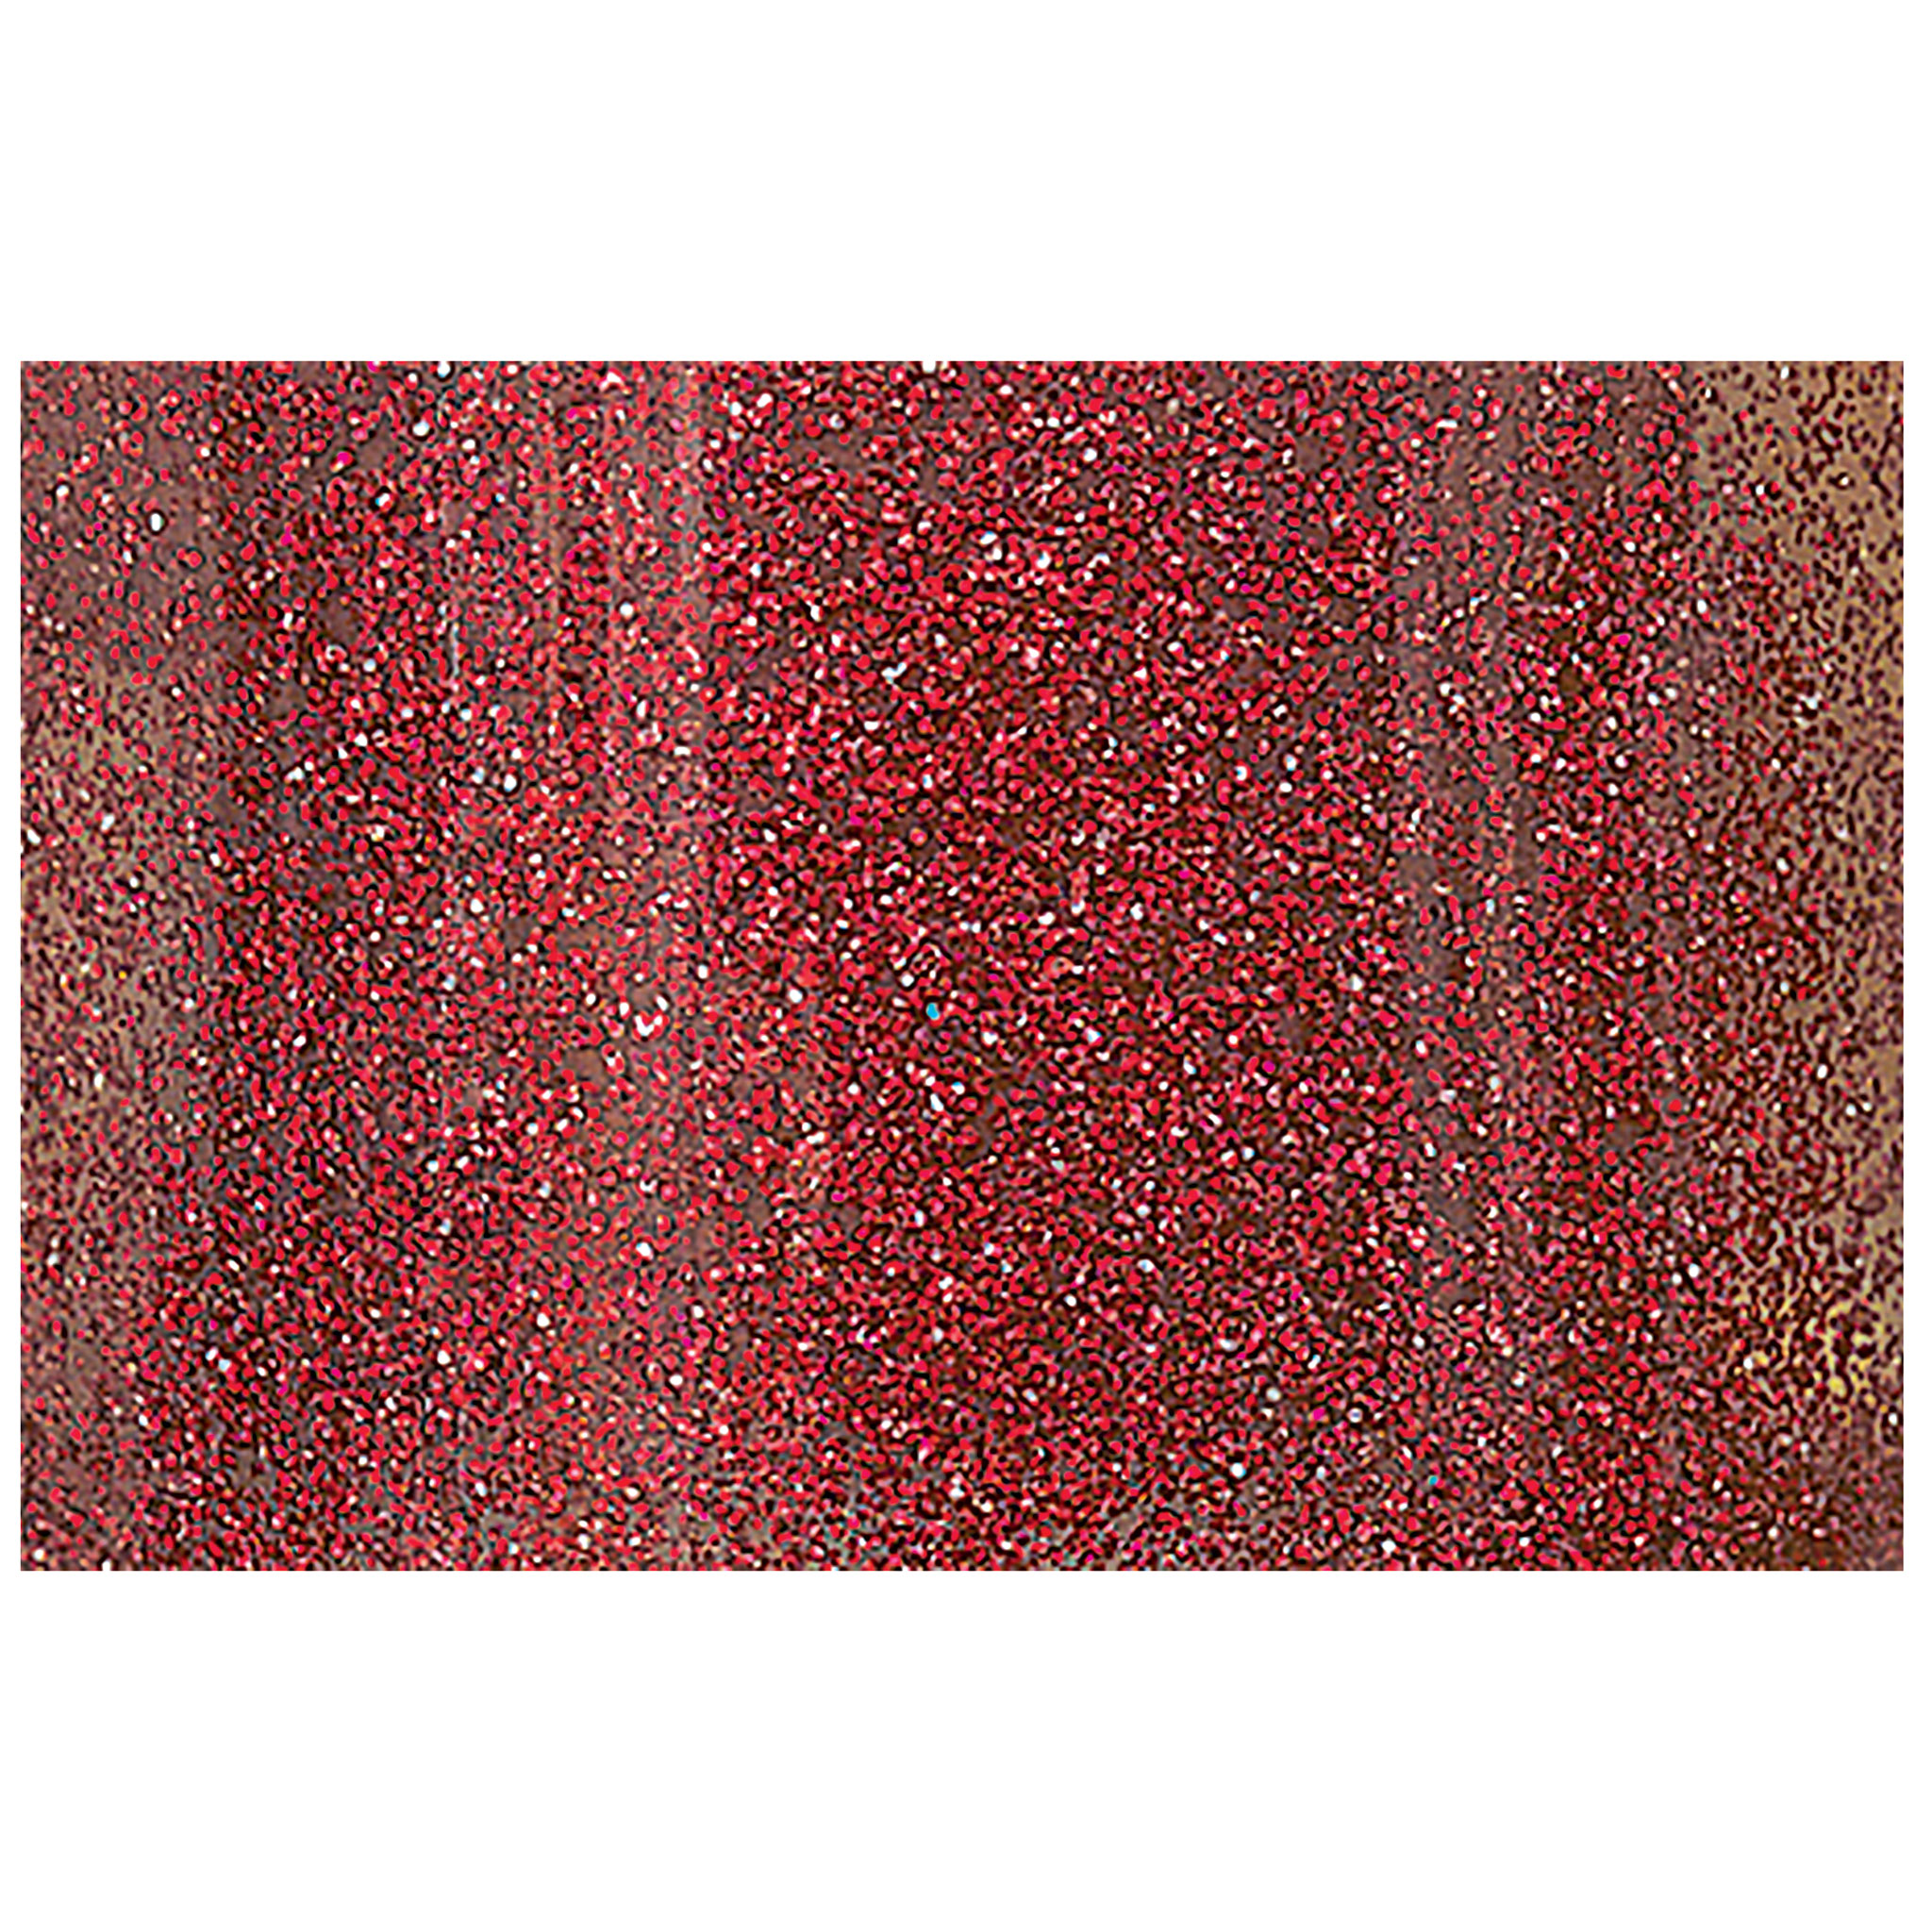 Krylon K03806A00 Glitter Blast Glitter Spray Paint for Craft Projects,  Cherry Bomb Red, 5.75 oz